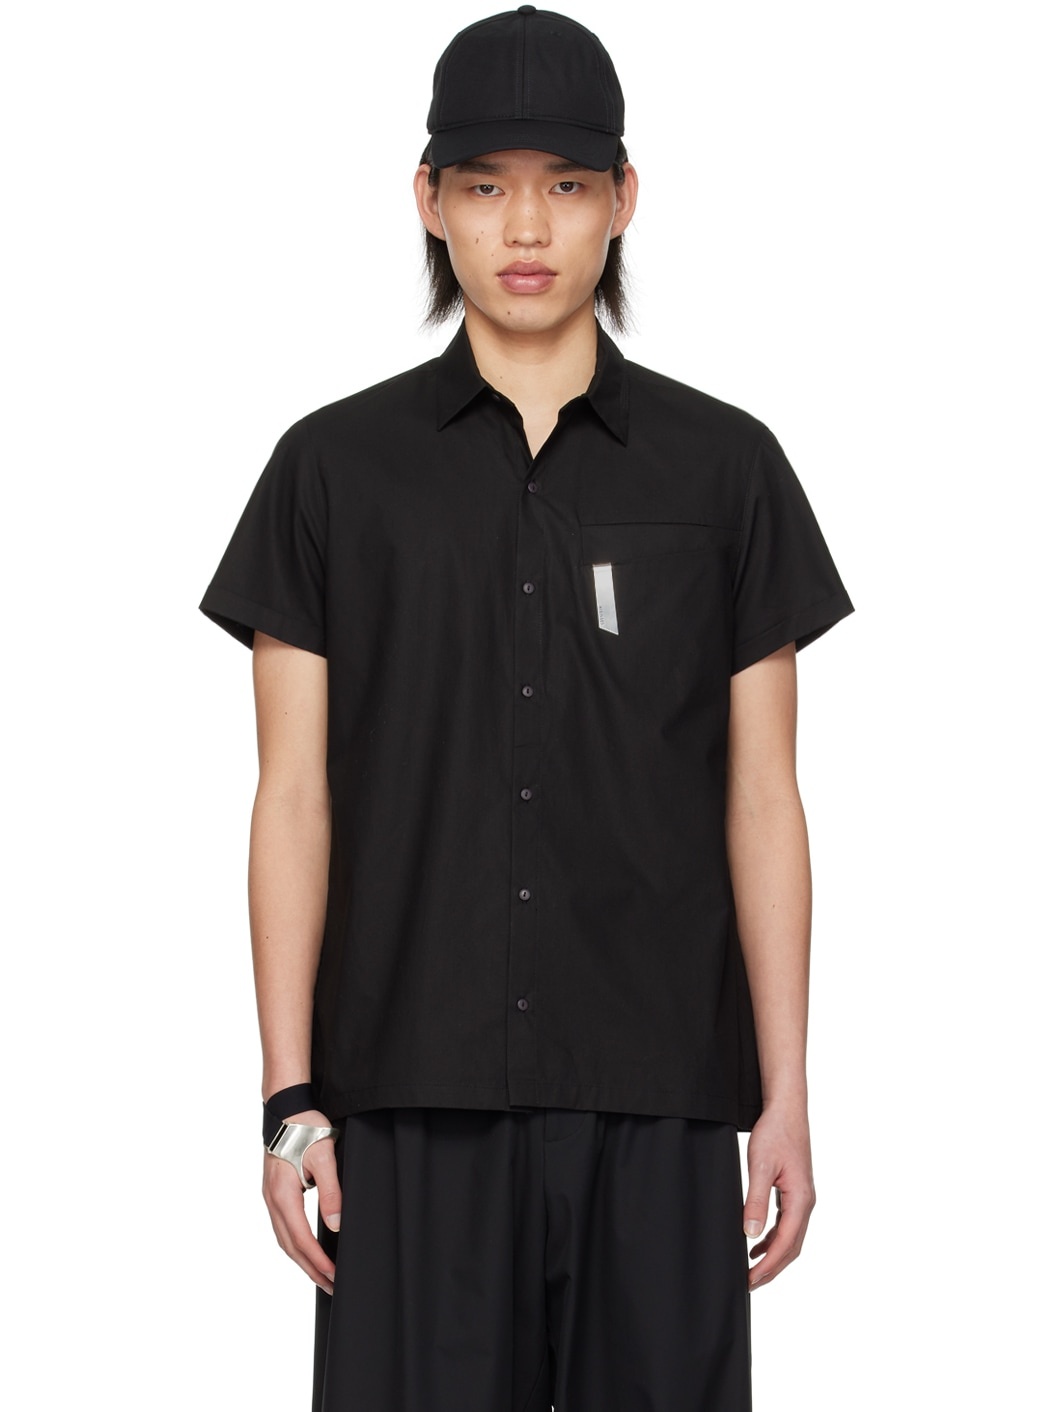 Black Pin Shirt - 1